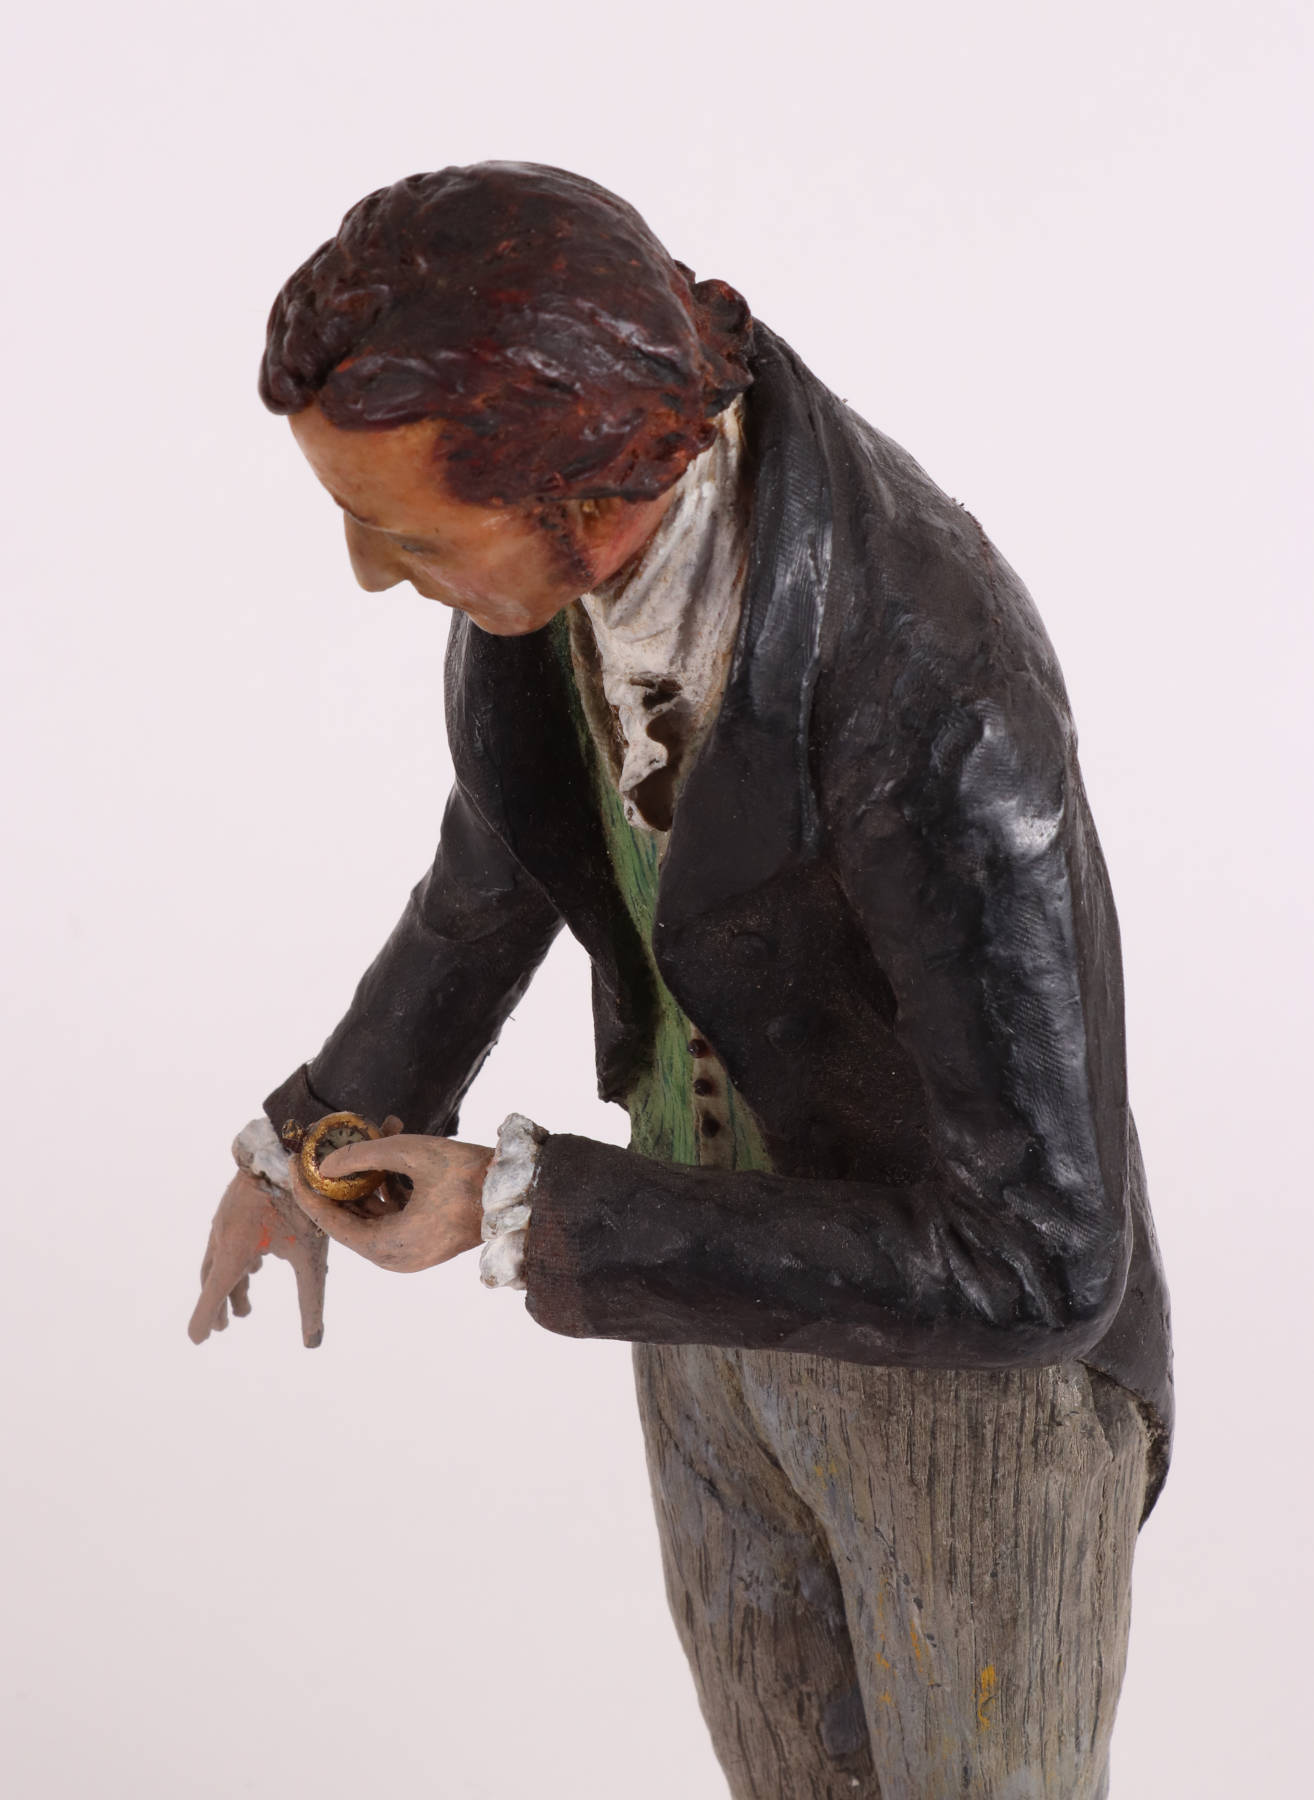 Wax Figure of a Gentleman with a Pocket Watch, c. 1820